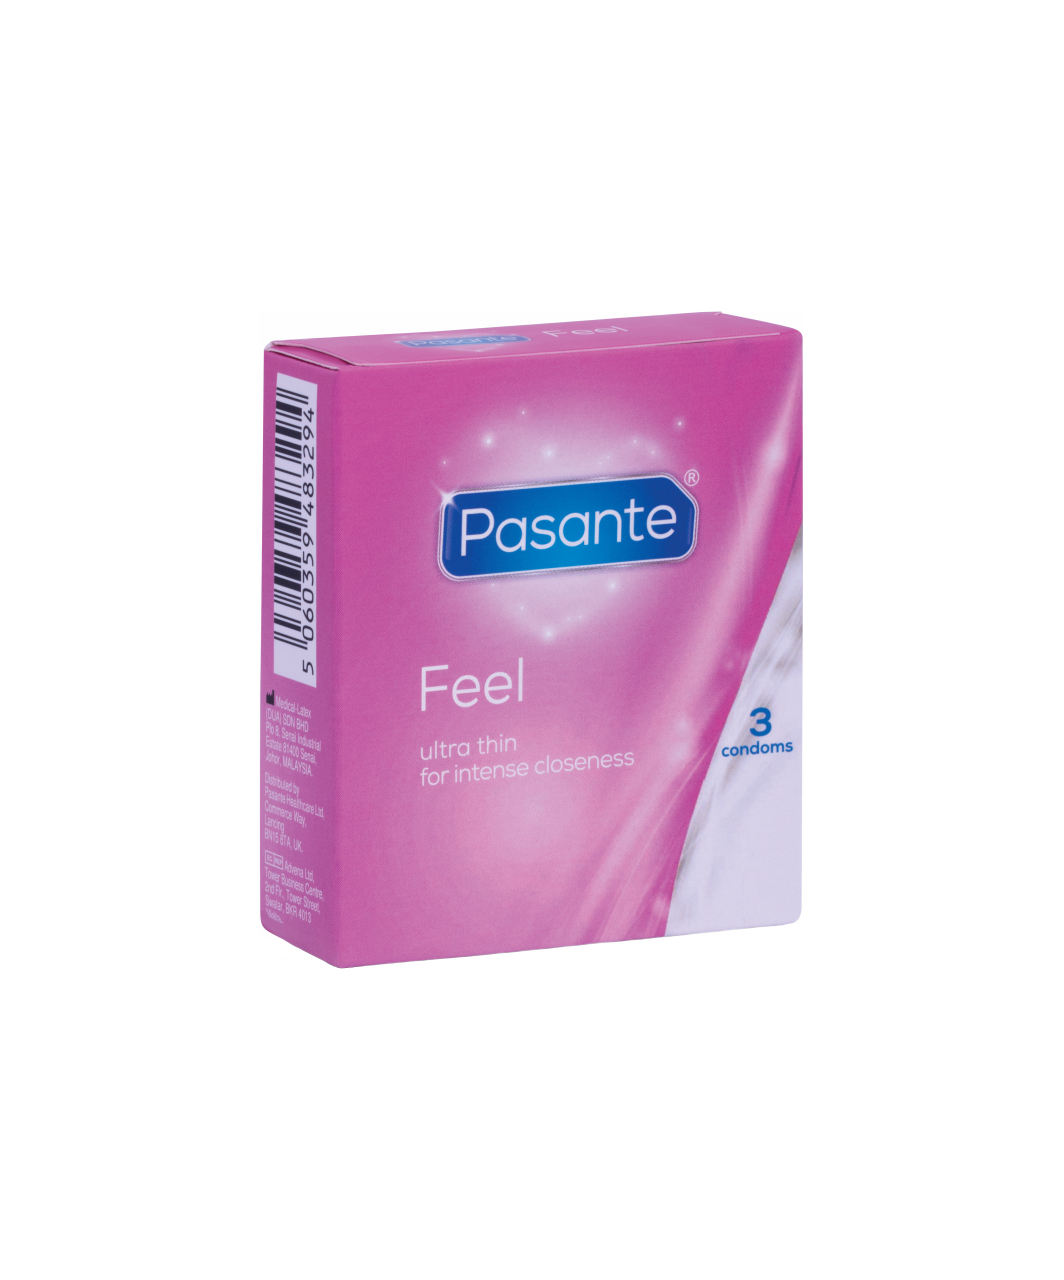 Pasante Feel презервативы (3 / 12 шт.)